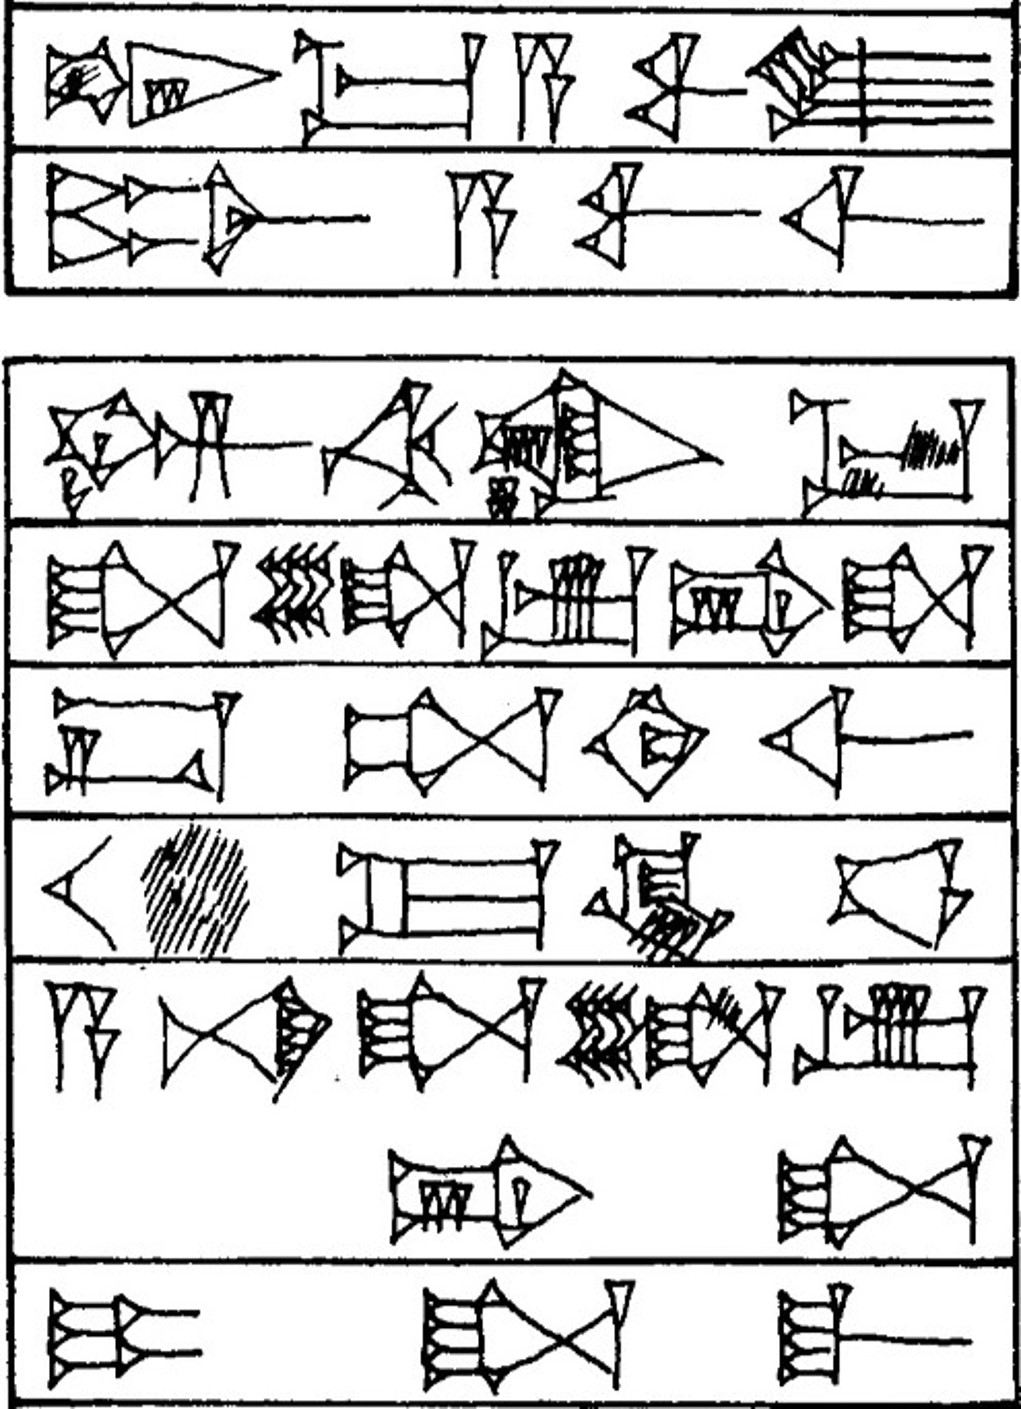 Law § 209 - Cuneiform - Law Code of Hammurabi